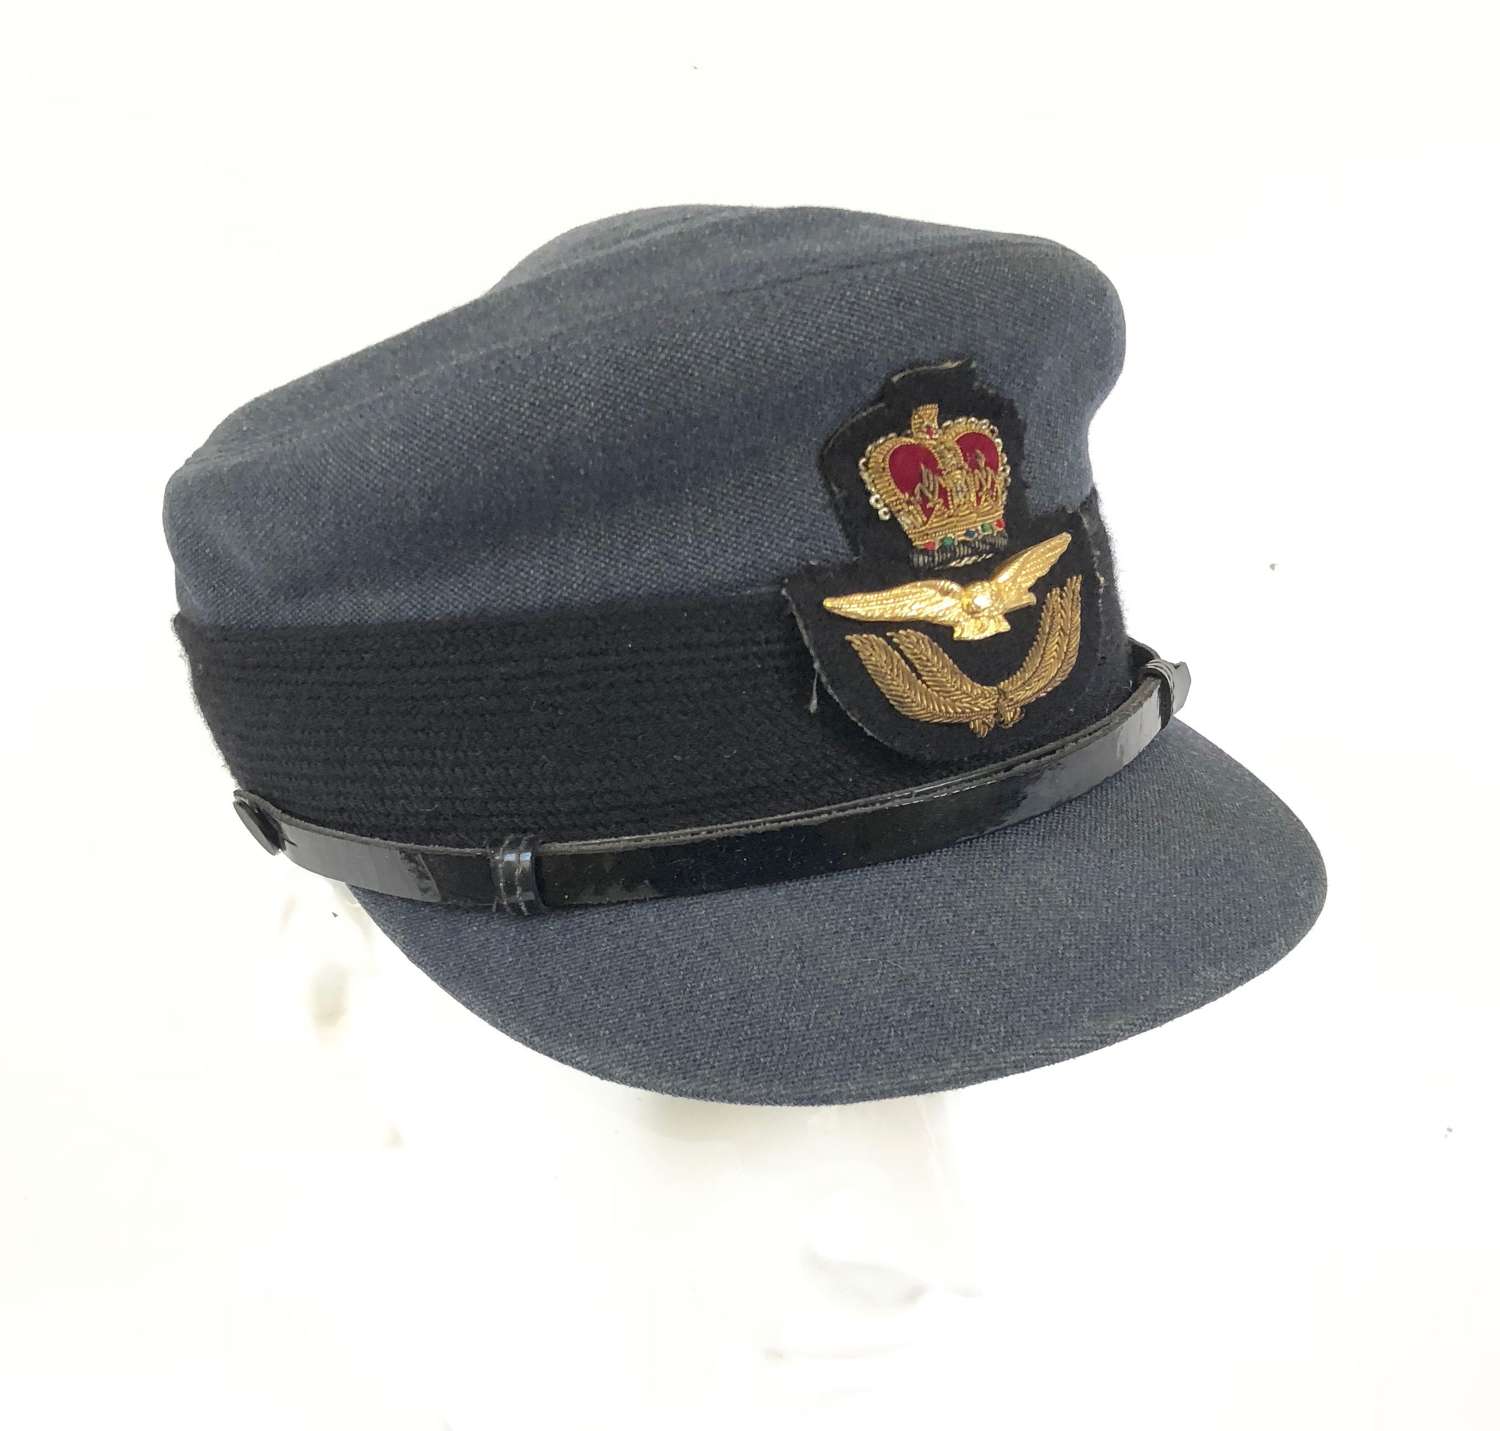 Women’s Royal Air Force 1954 Pattern Officer’s Cap.